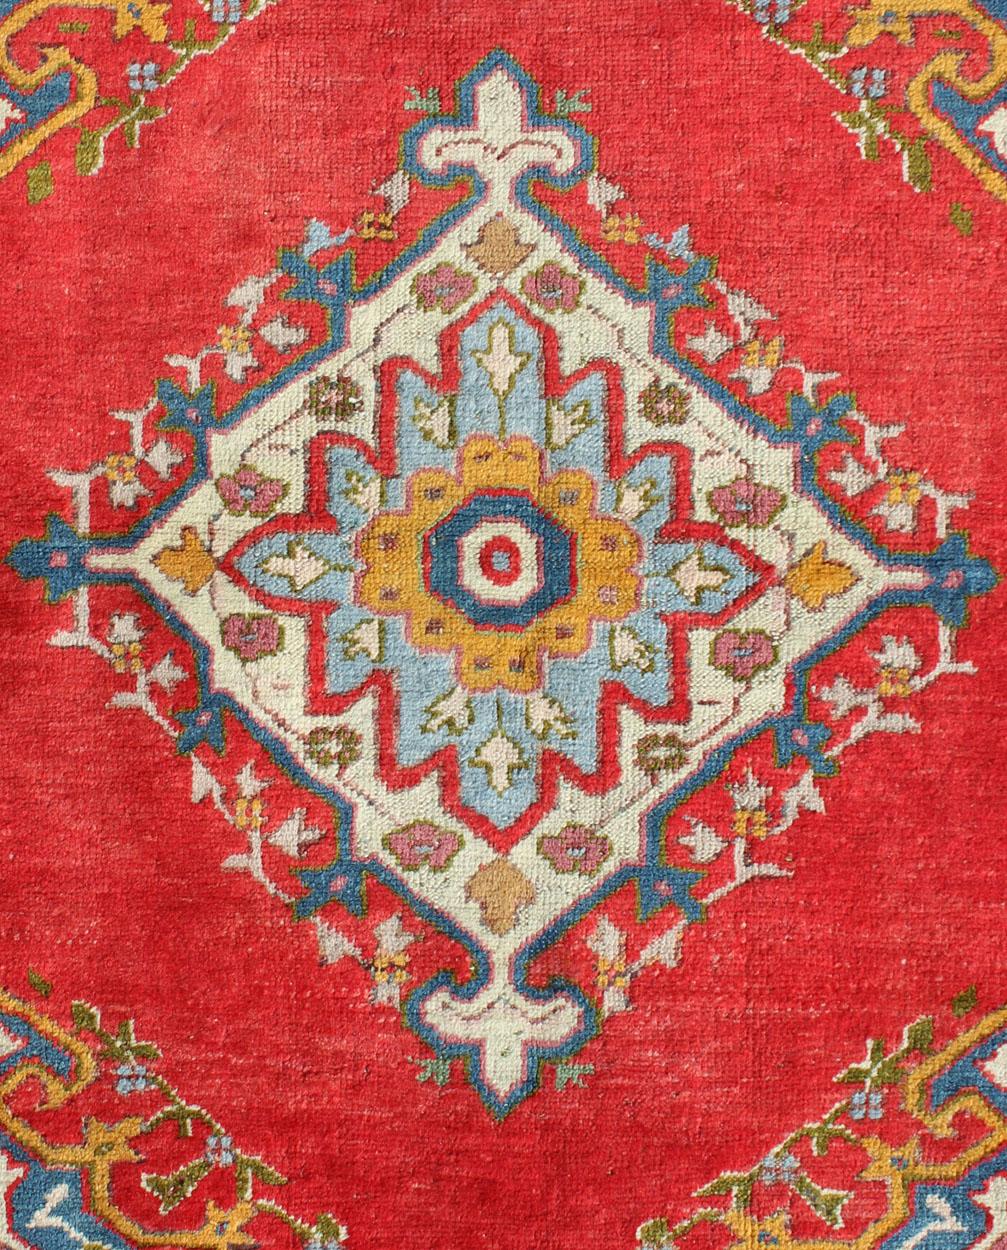 Antique Turkish Oushak small rug in bright red, blue, lavender, orange & green. 
Country of origin: Turkey; Type: Oushak; Design: Medallion, Floral Medallion; Keivan Woven Art: EN-141030, antique Oushak

Measures: 3'5 x 5'3

This antique Oushak  is